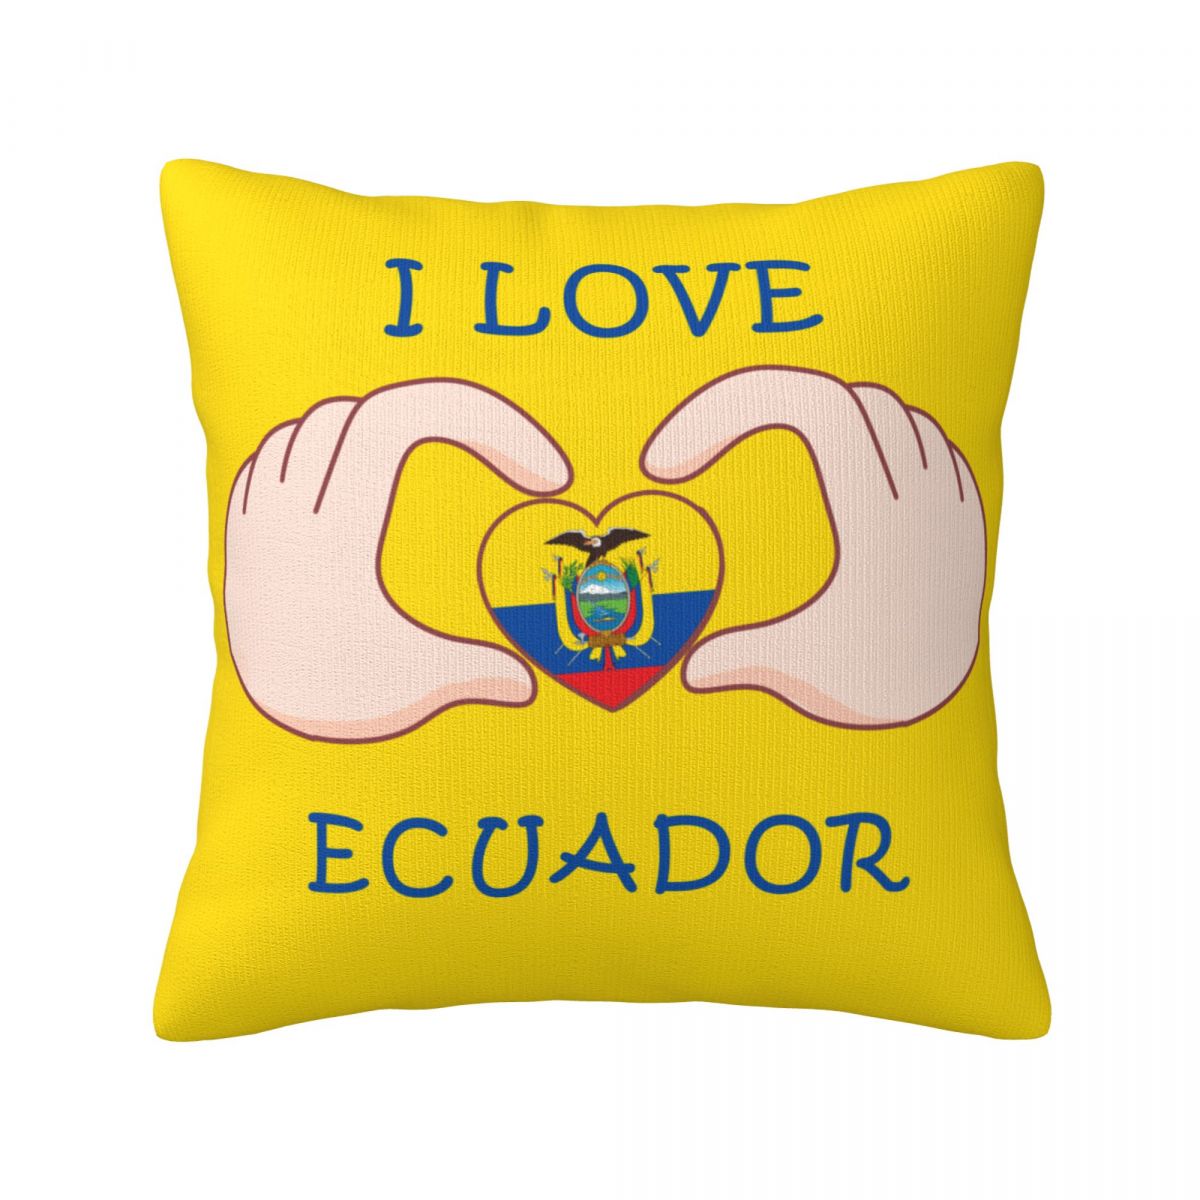 I Love Ecuador Pillow Covers 18x18 Inch